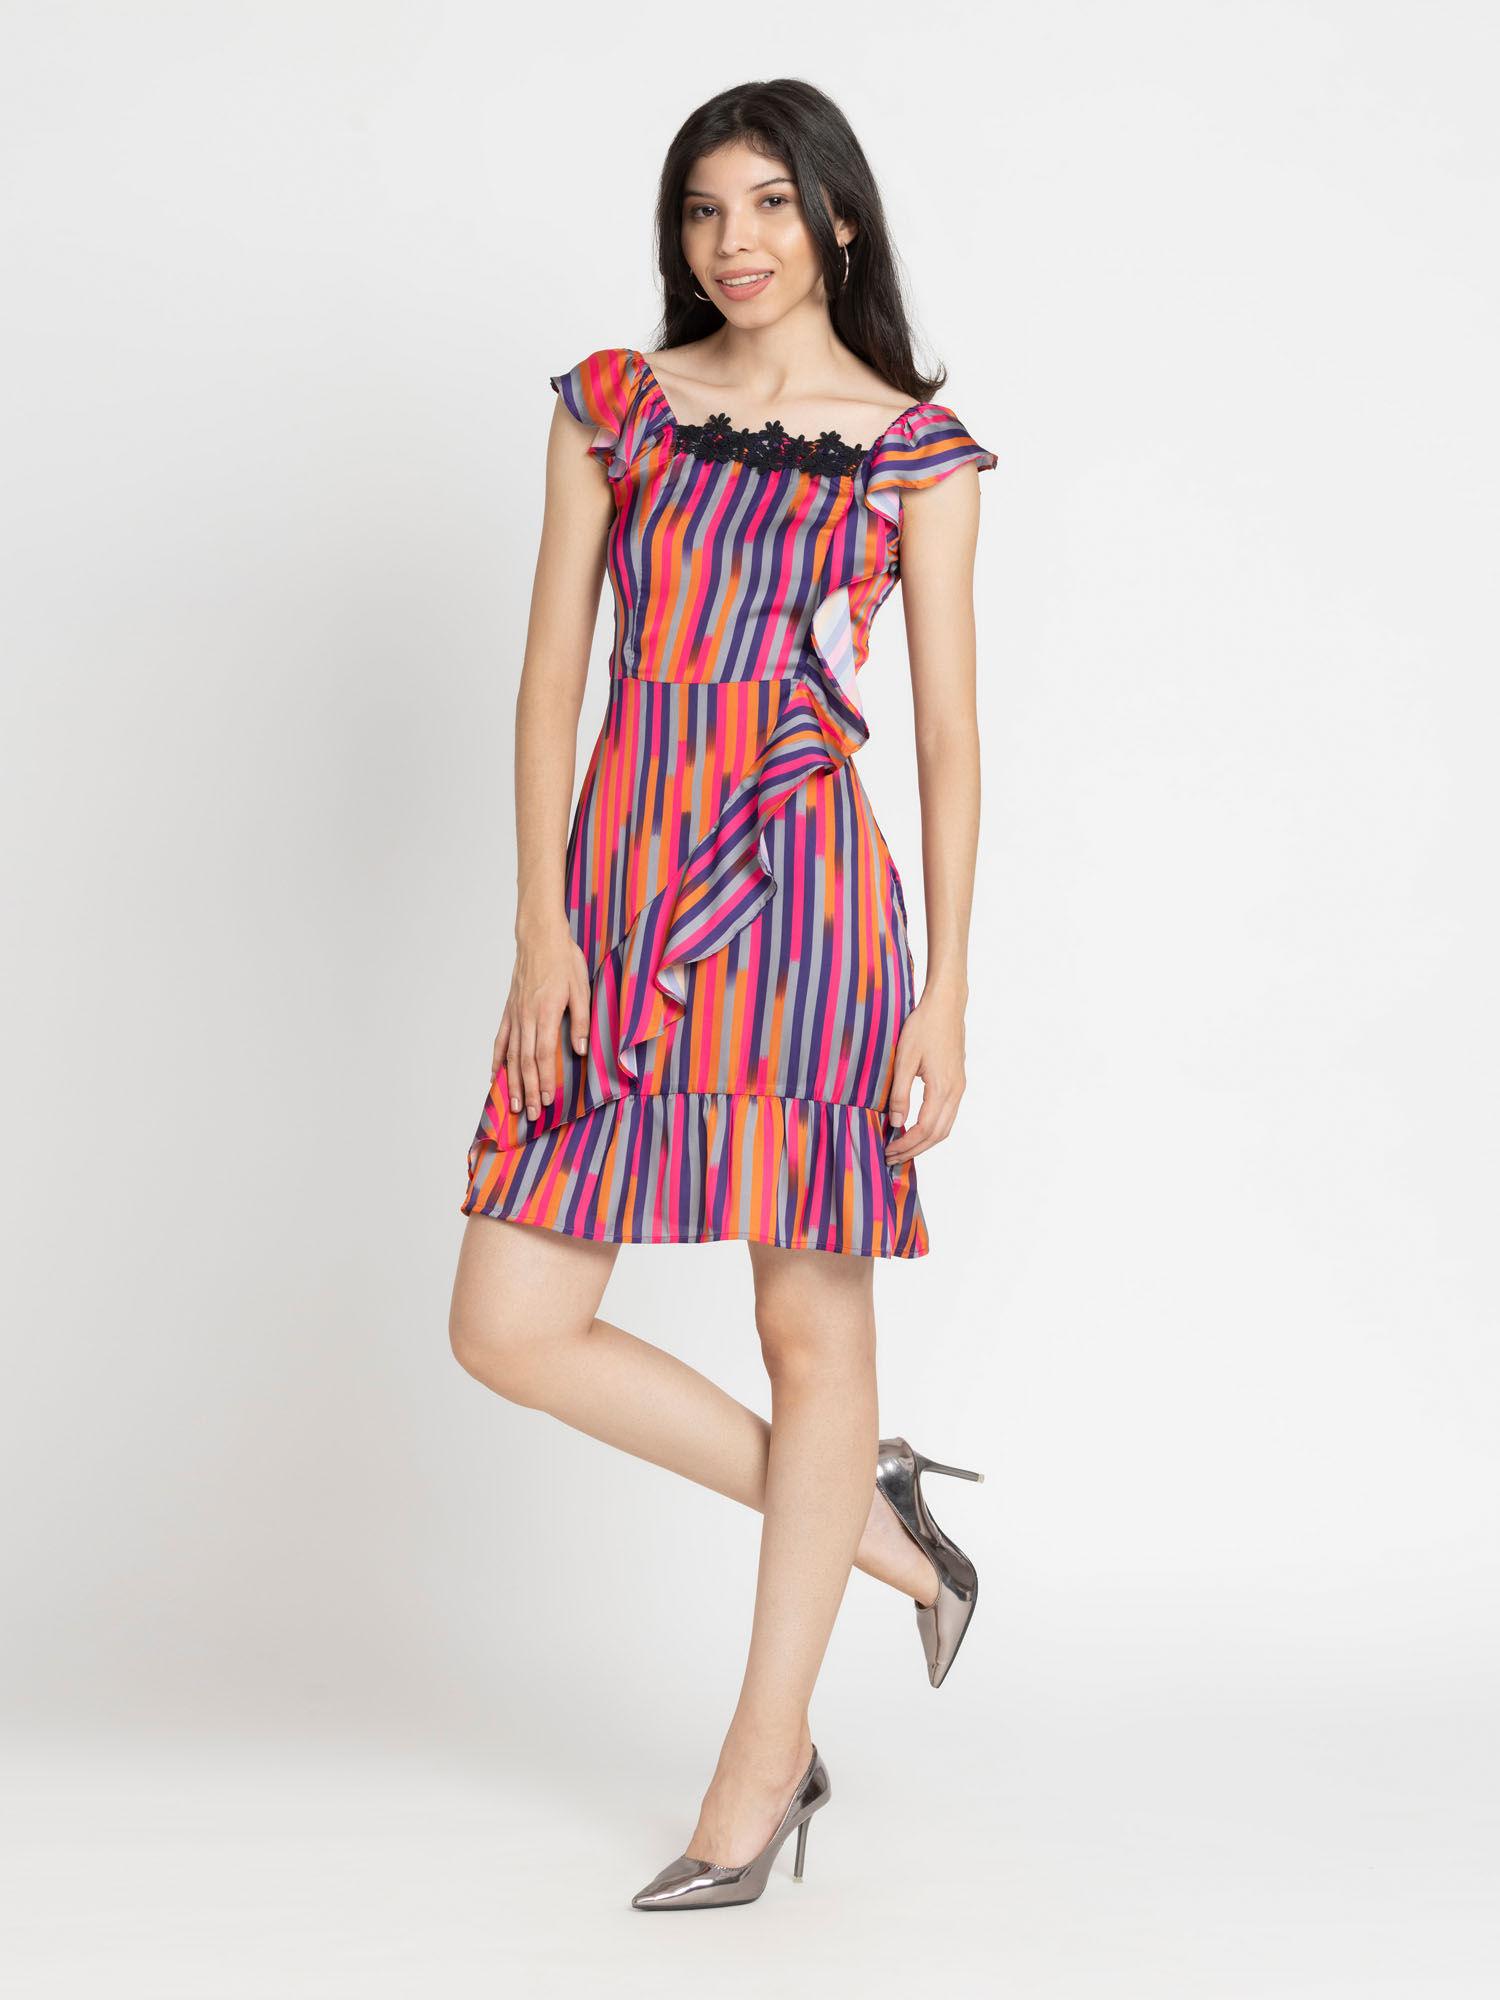 square neck purple striped casual dresses for women